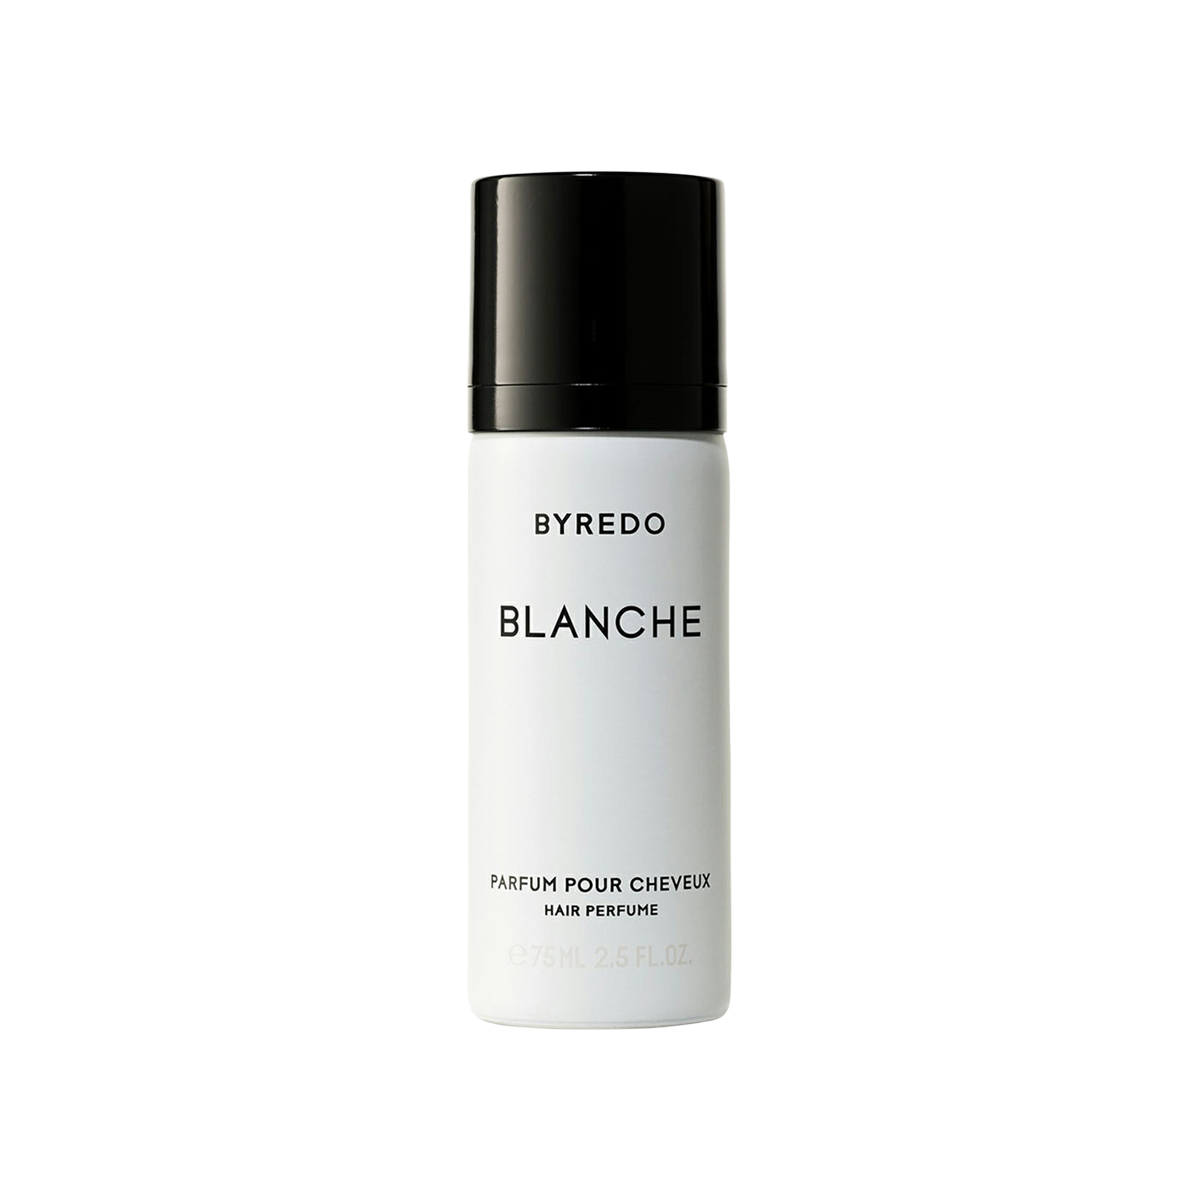 Byredo - Blanche Hair Perfume